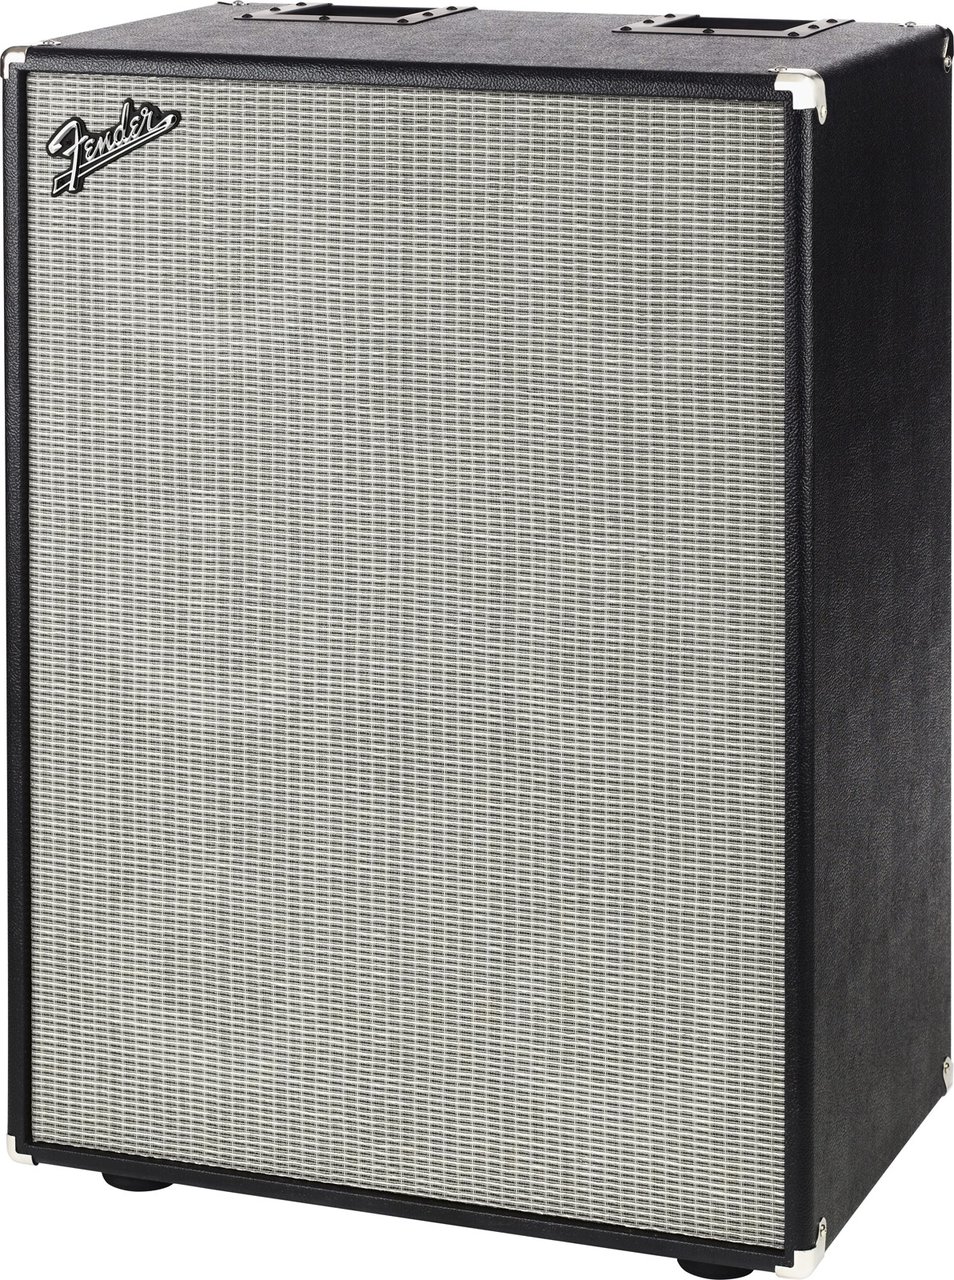 Fender Bassman 610 Neo - Black/silver - Bass amp cabinet - Variation 1